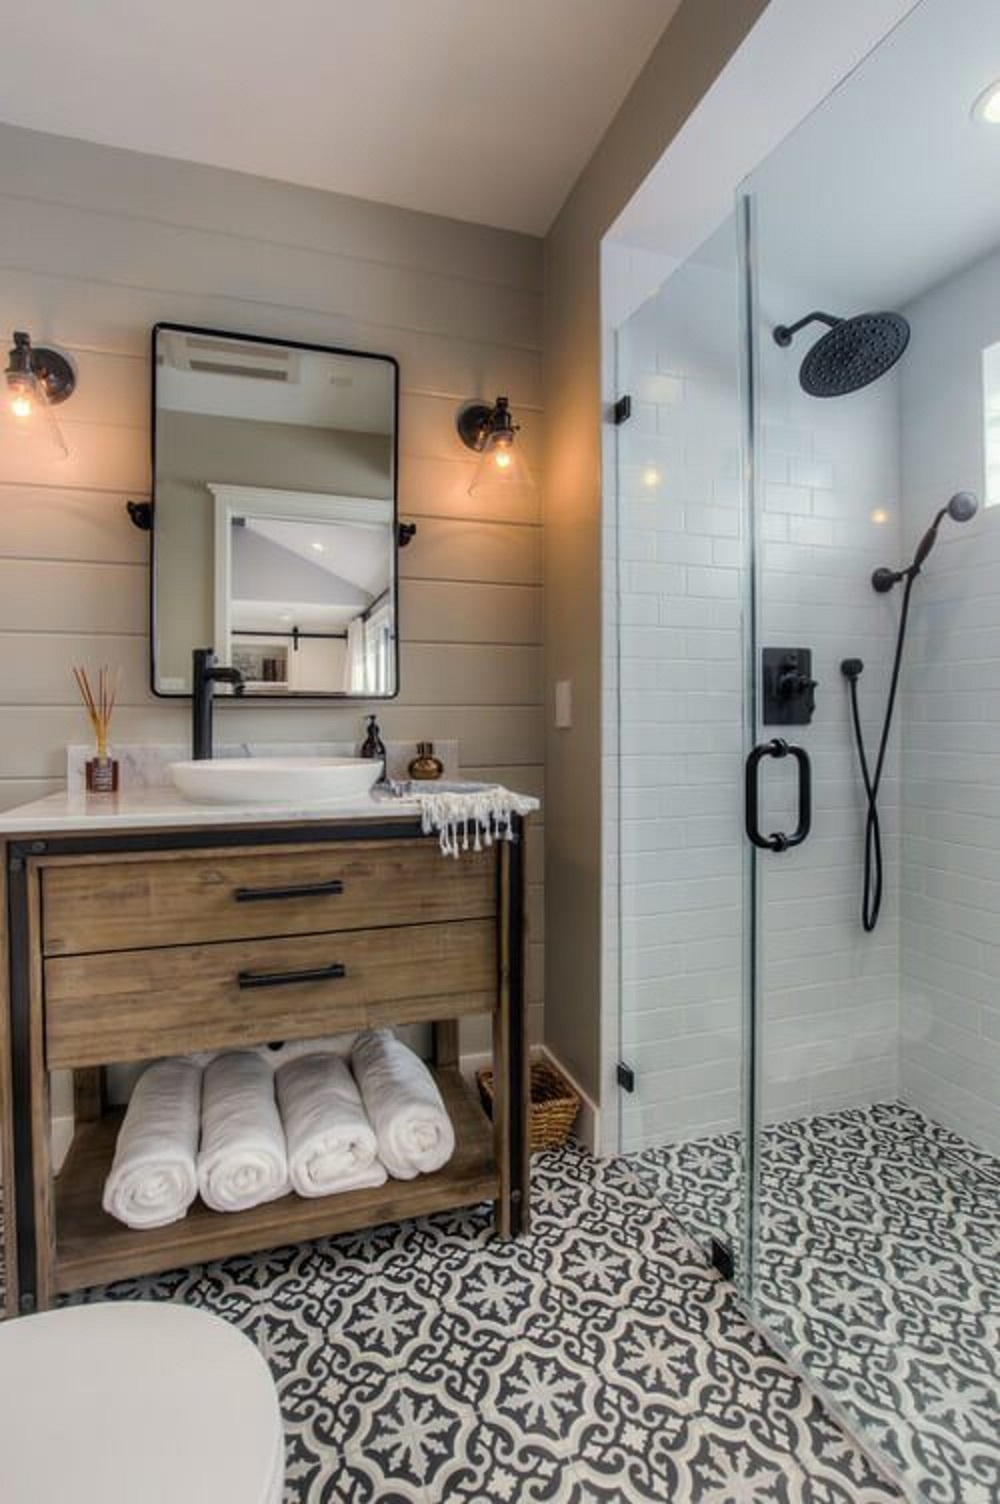 van10 Neat corner bathroom vanity ideas you will find useful